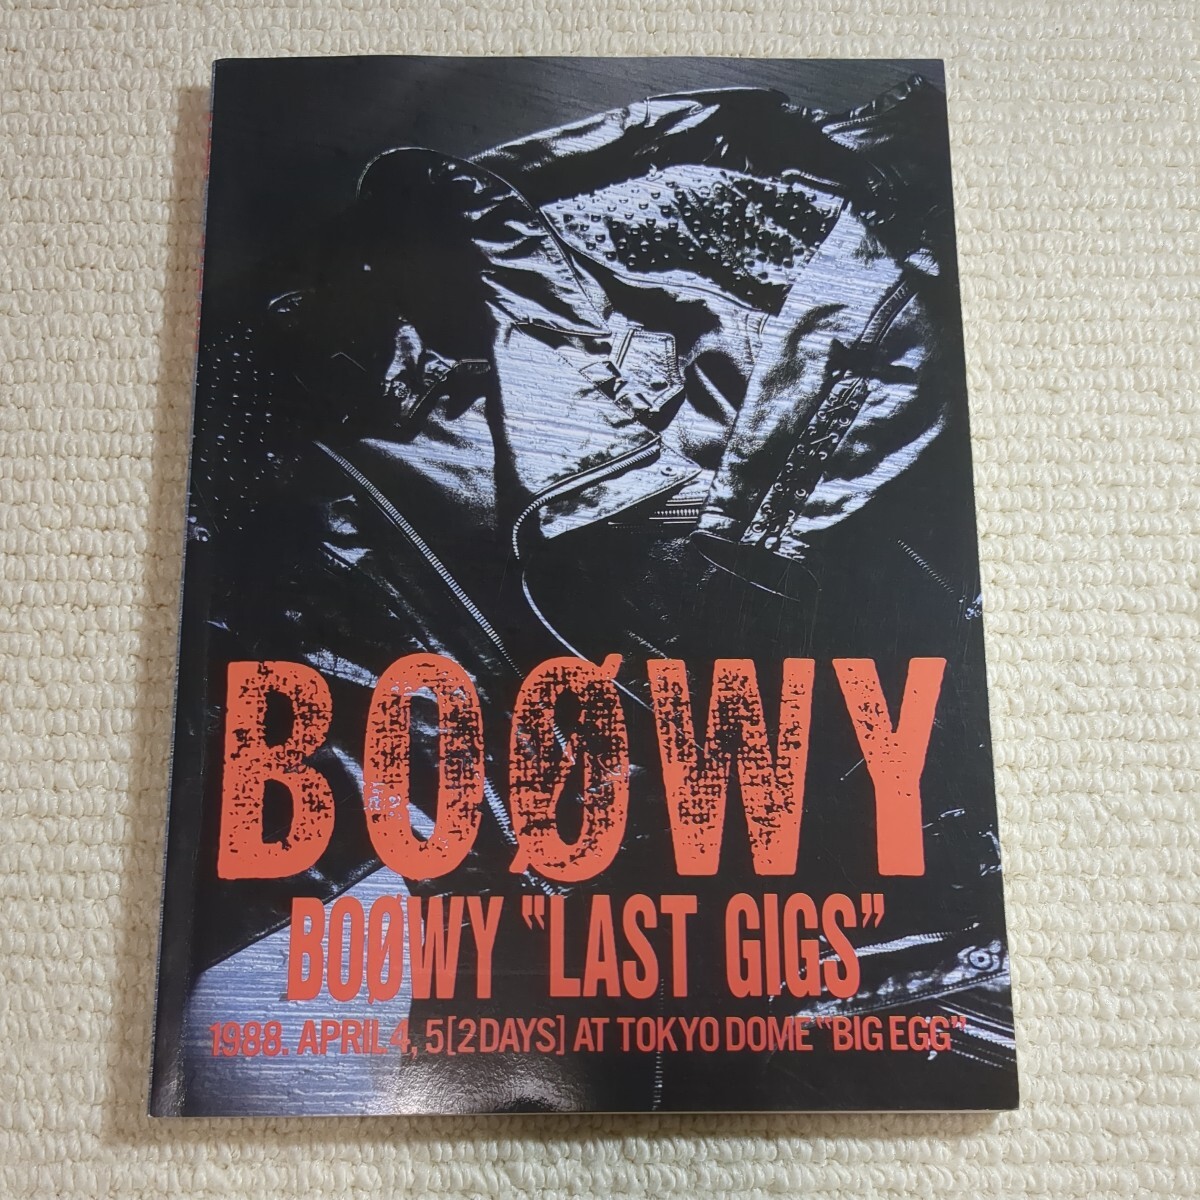 BOOWY LAST GIGS 1988.APRIL 4,5（2DAYS）AT TOKYO DOME BIG EGG バンドスコア 氷室京介 布袋寅泰 ボウイ ボーイの画像1